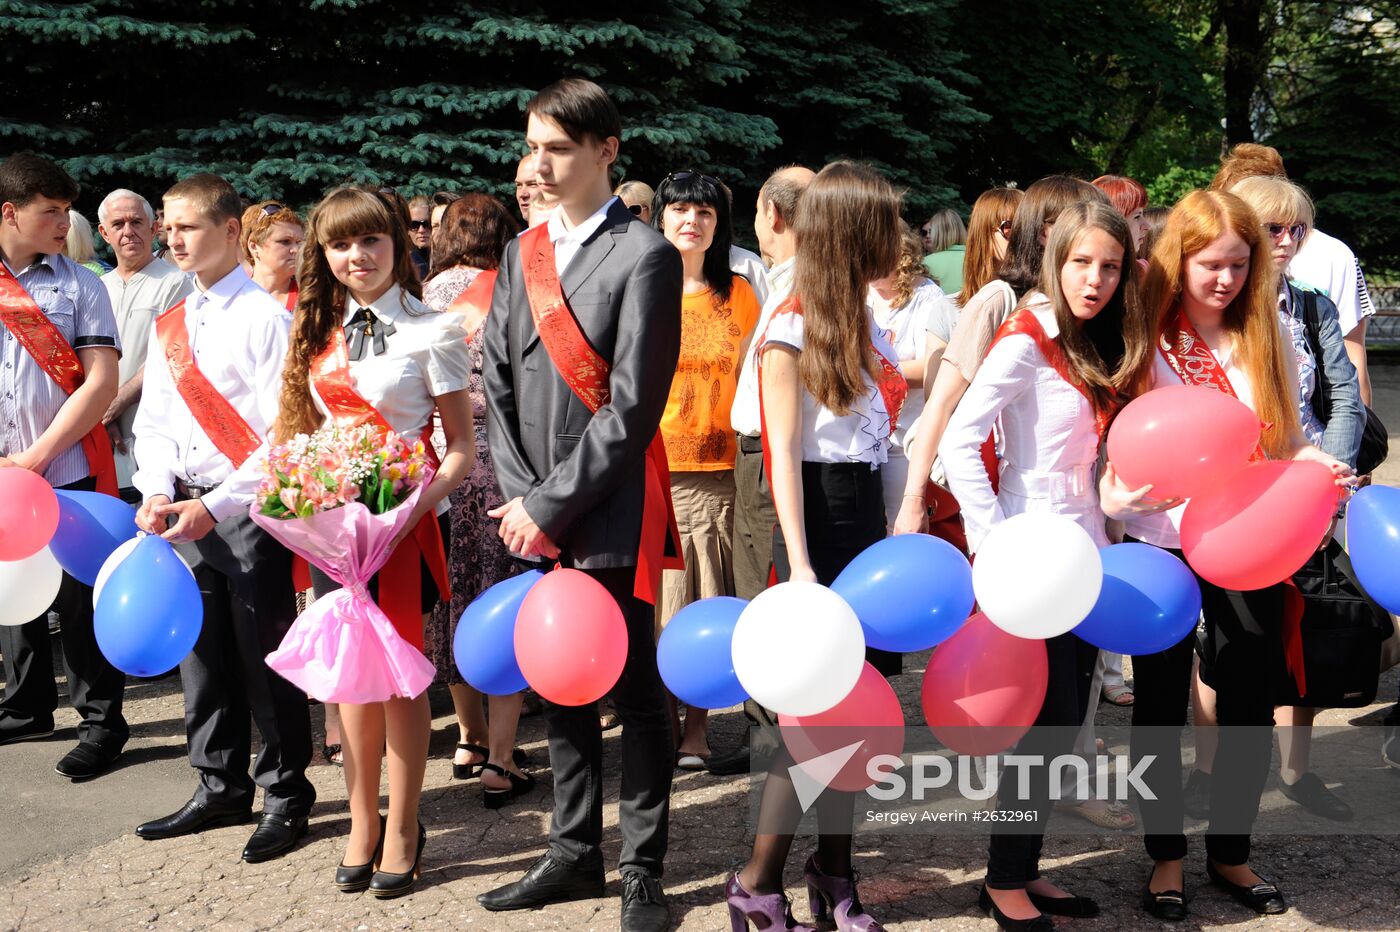 Duma deputy Iosif Kobzon visits Donetsk